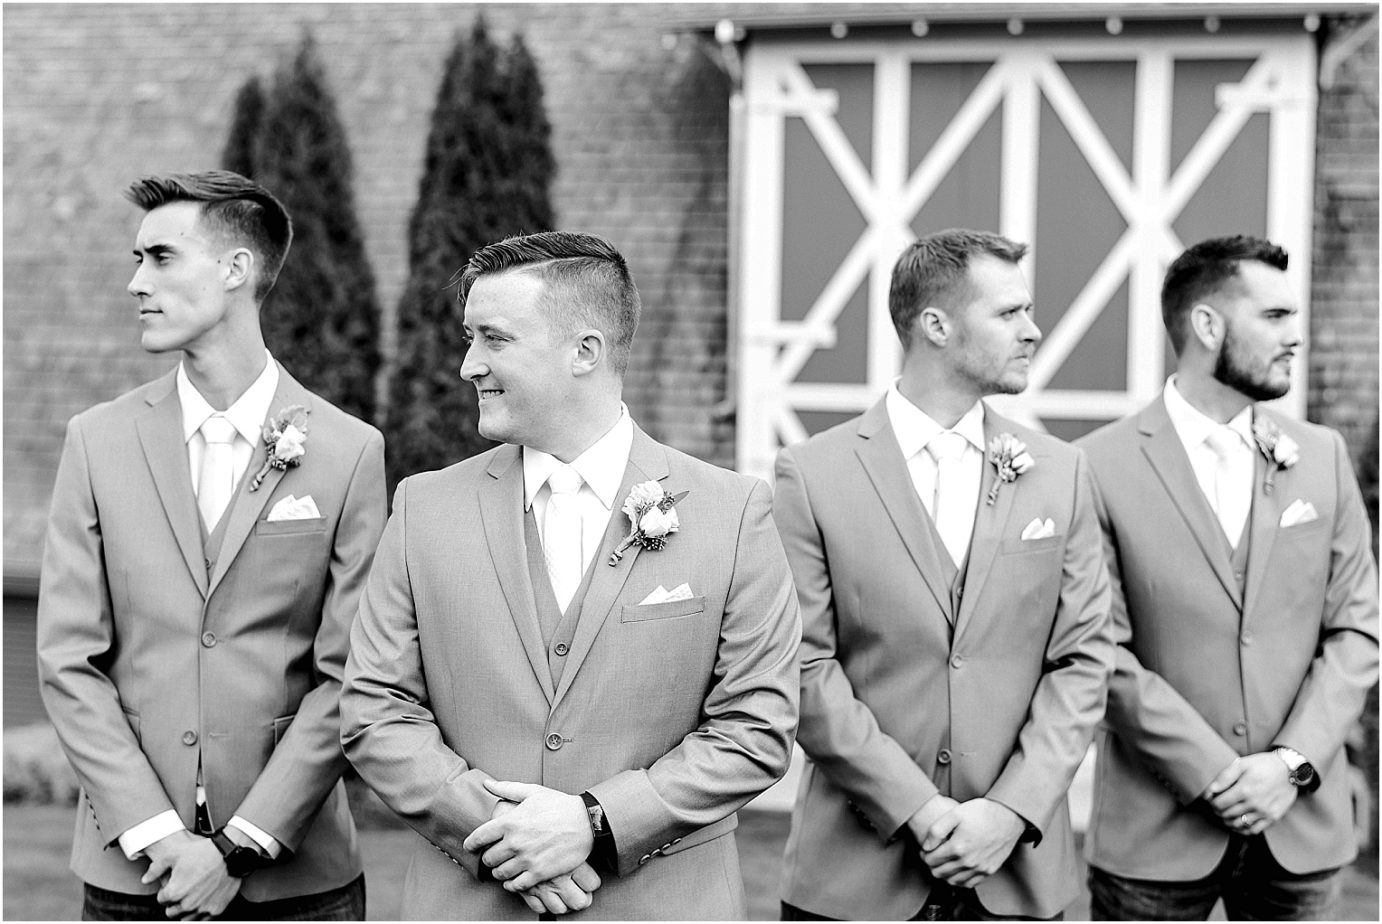 Winn Homestead Wedding groom with groomsmen